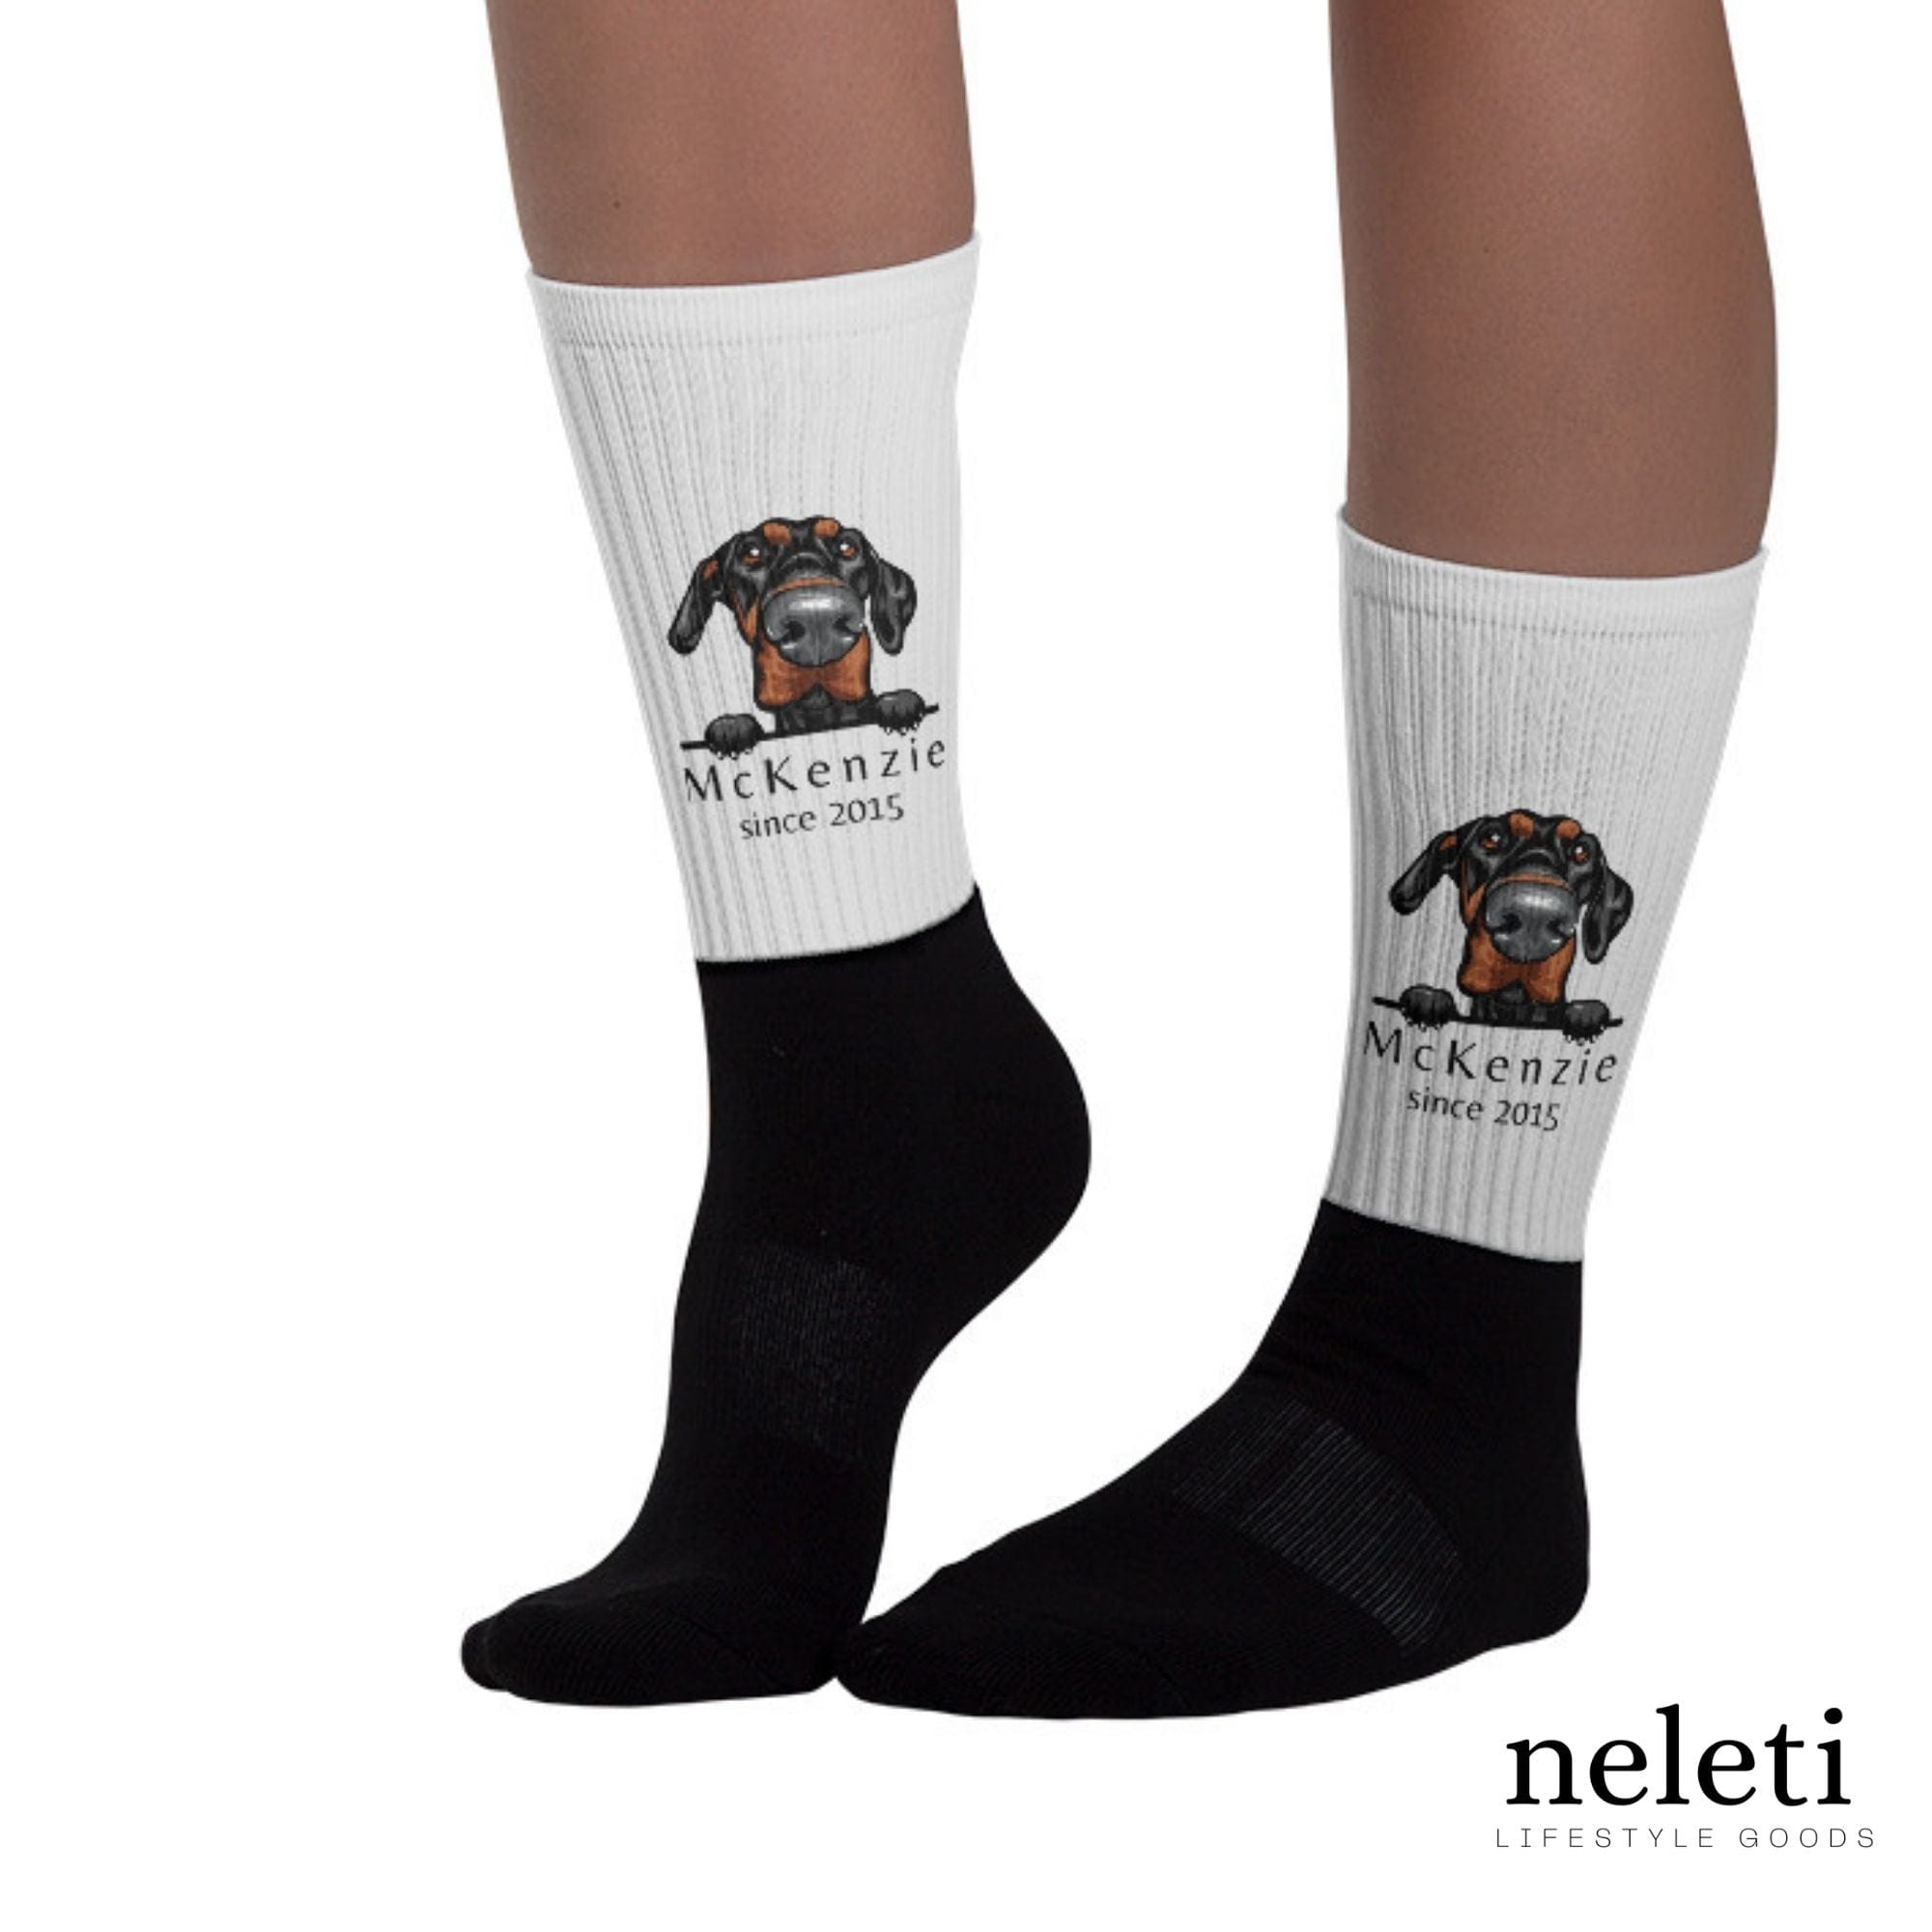 neleti.com-custom-grey-socks-for-dog-lovers